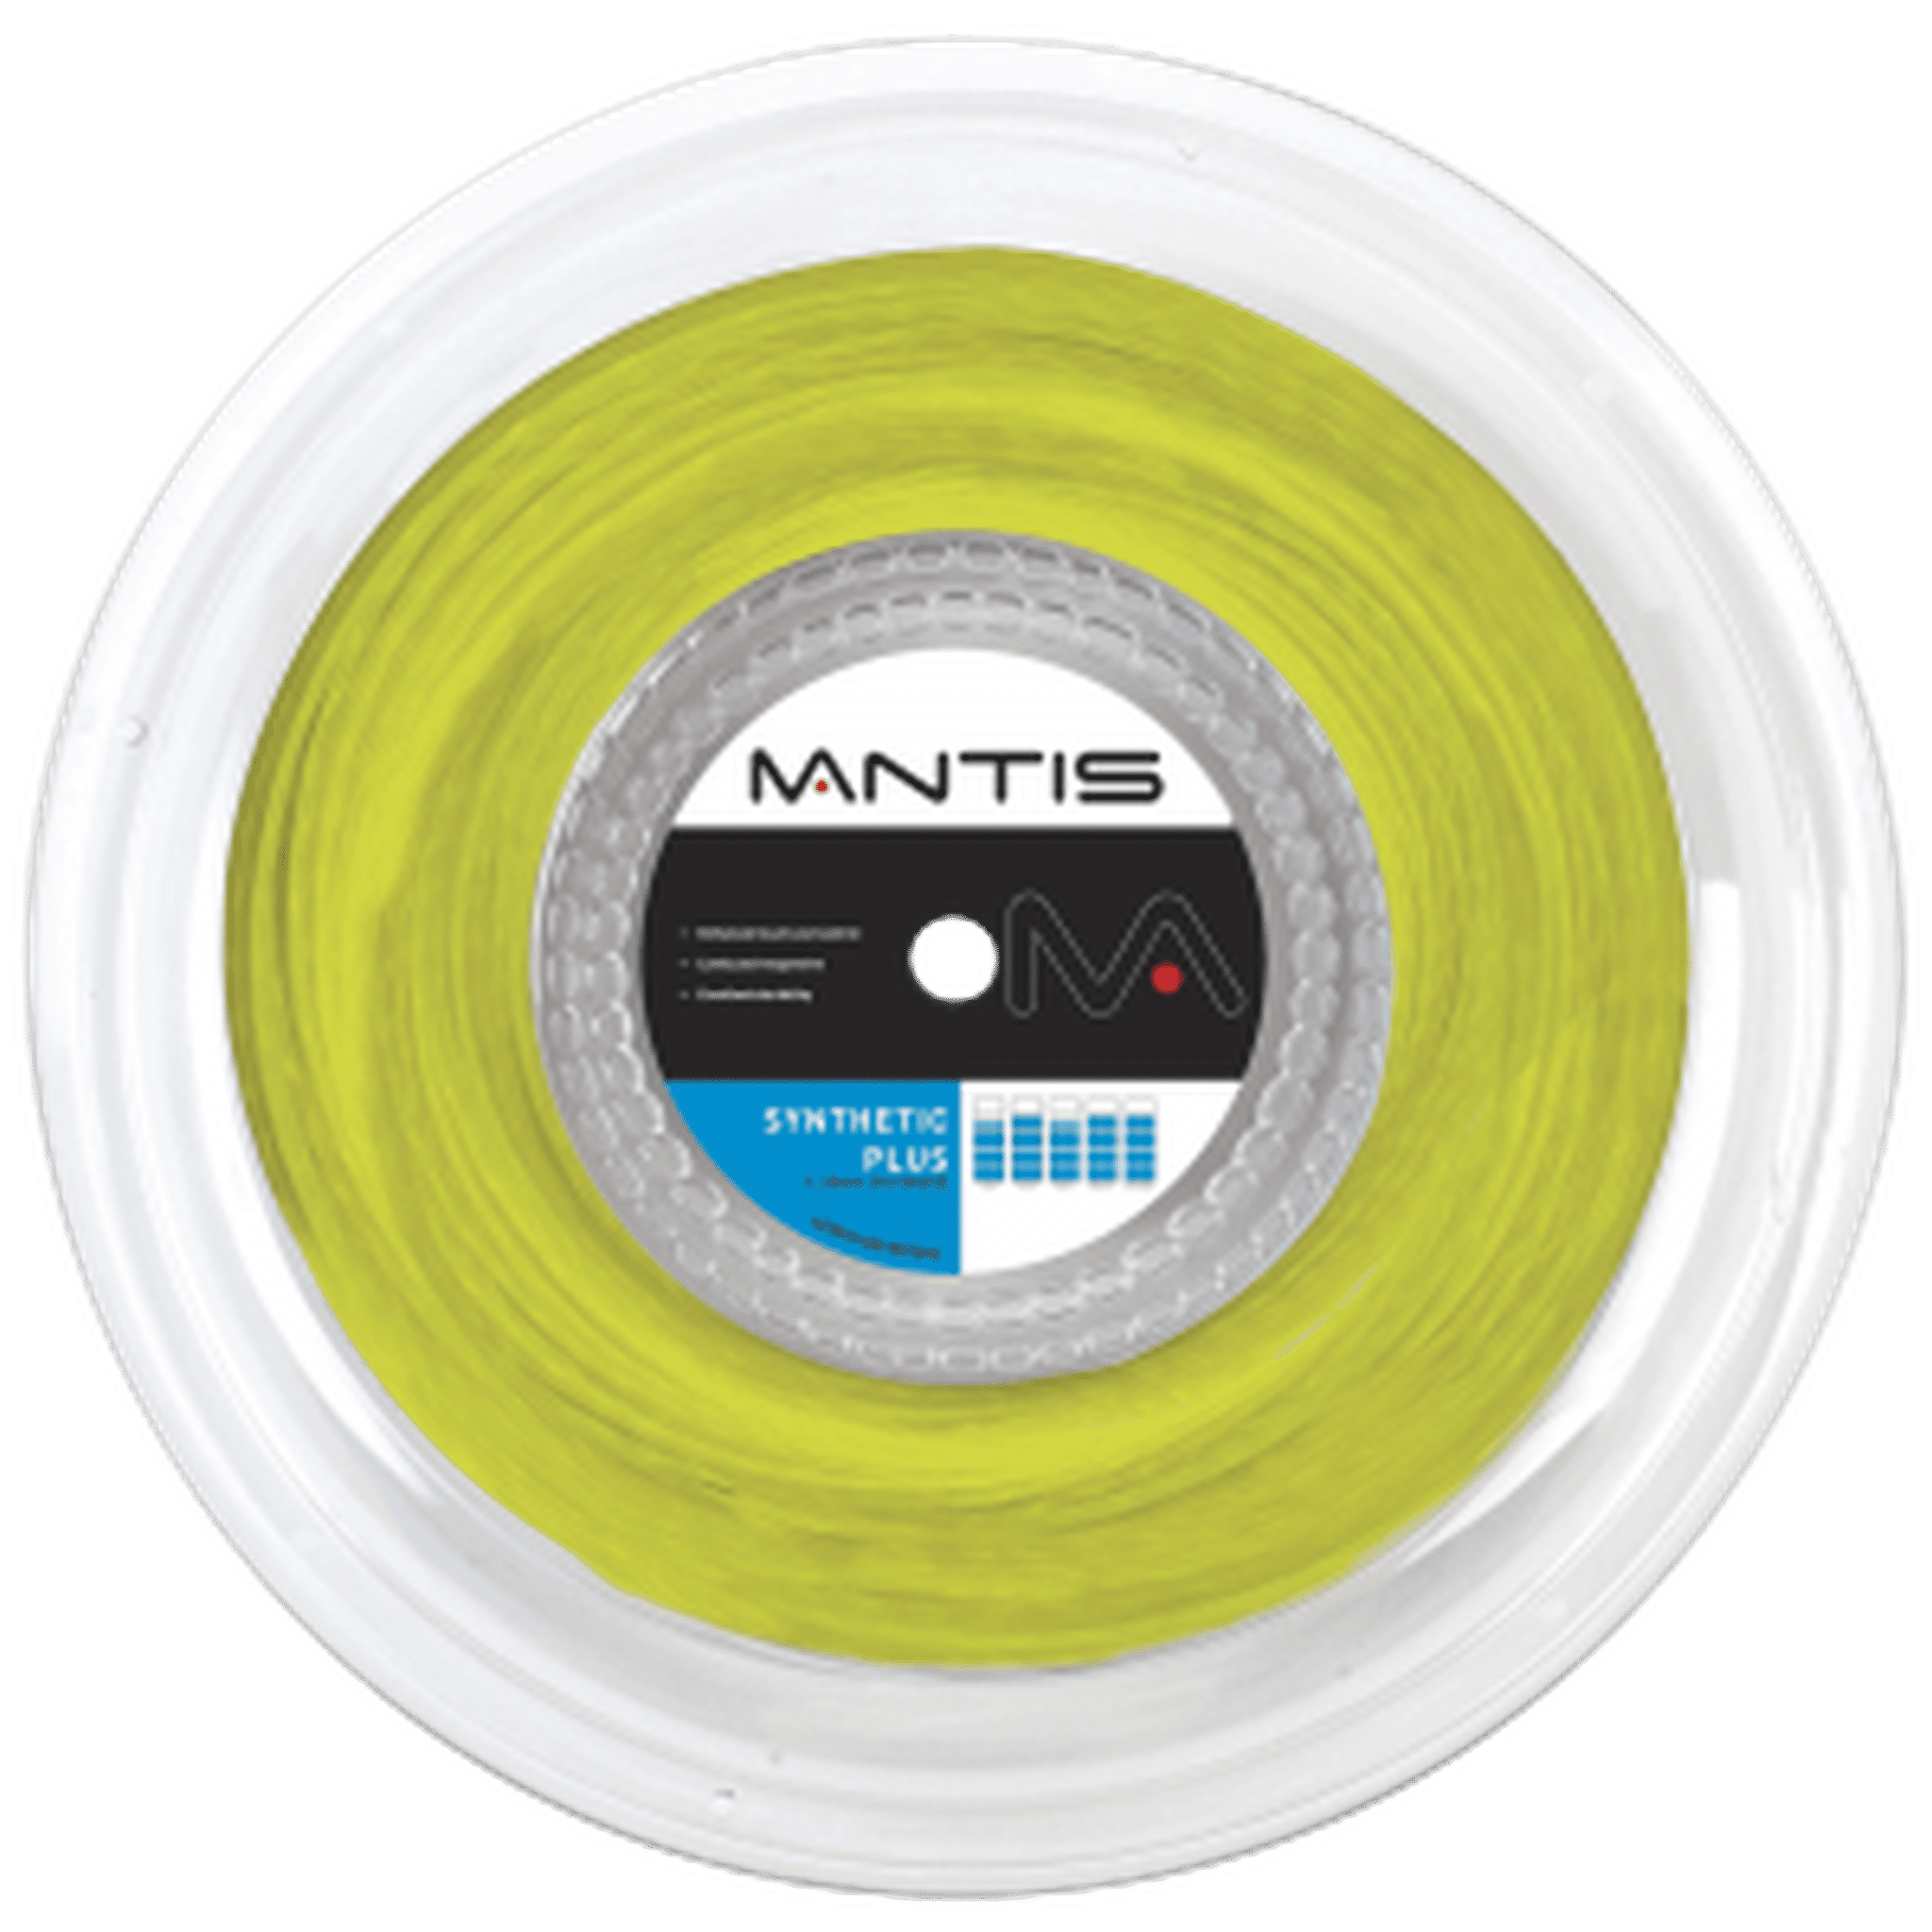 MANTIS Synthetic Plus String 16G - Reel 200m